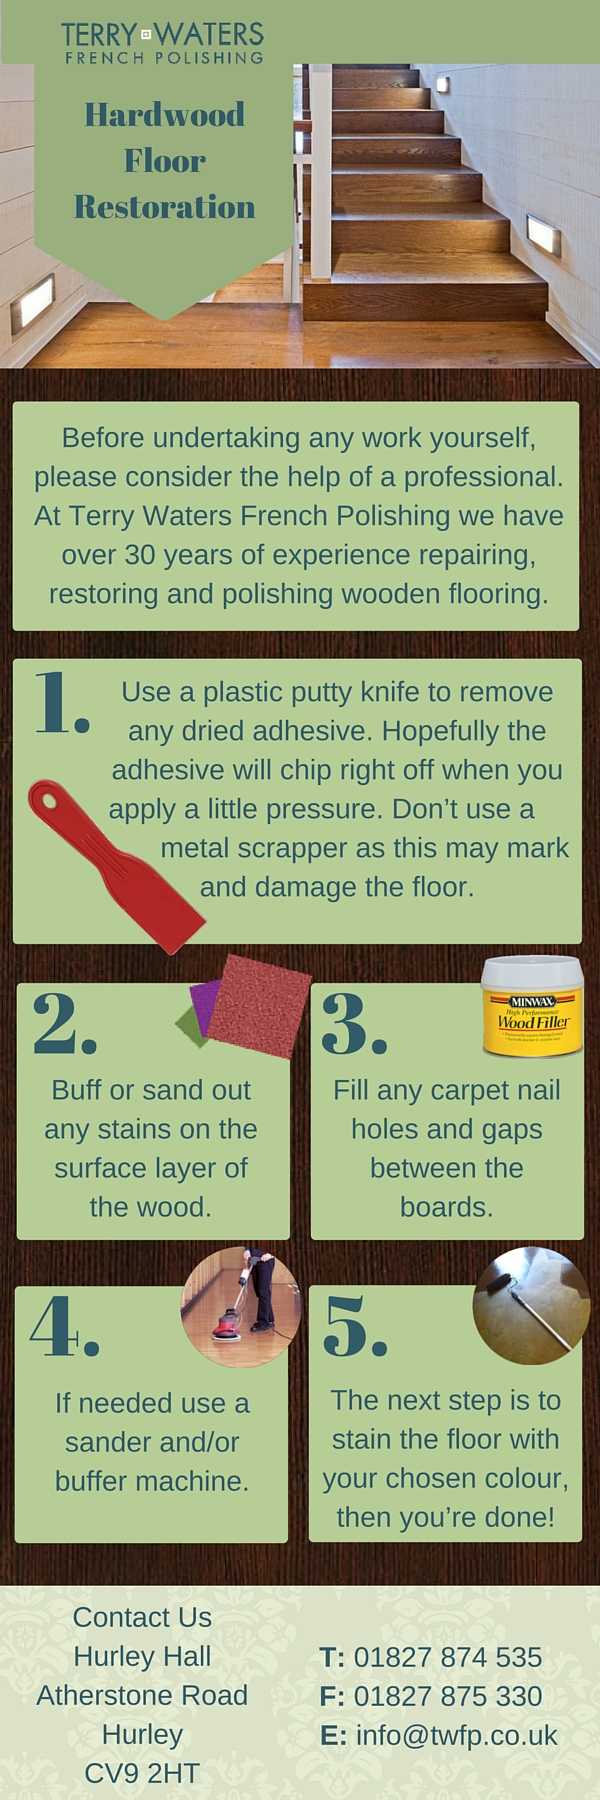 Hardwood Floor Restoration Infographic